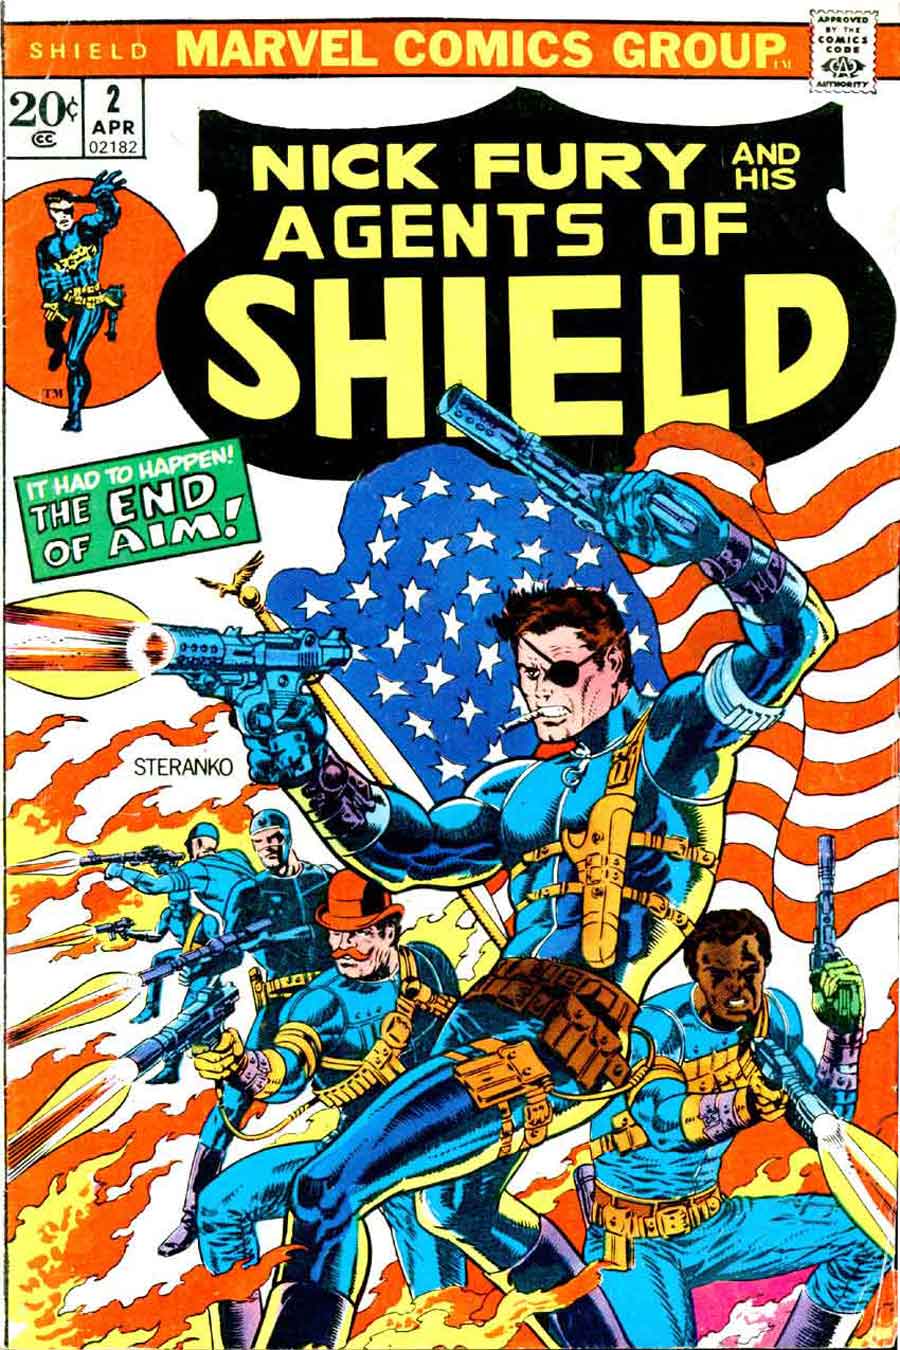 Shield v1 #2 marvel bronze age comic book cover art by Jim Steranko